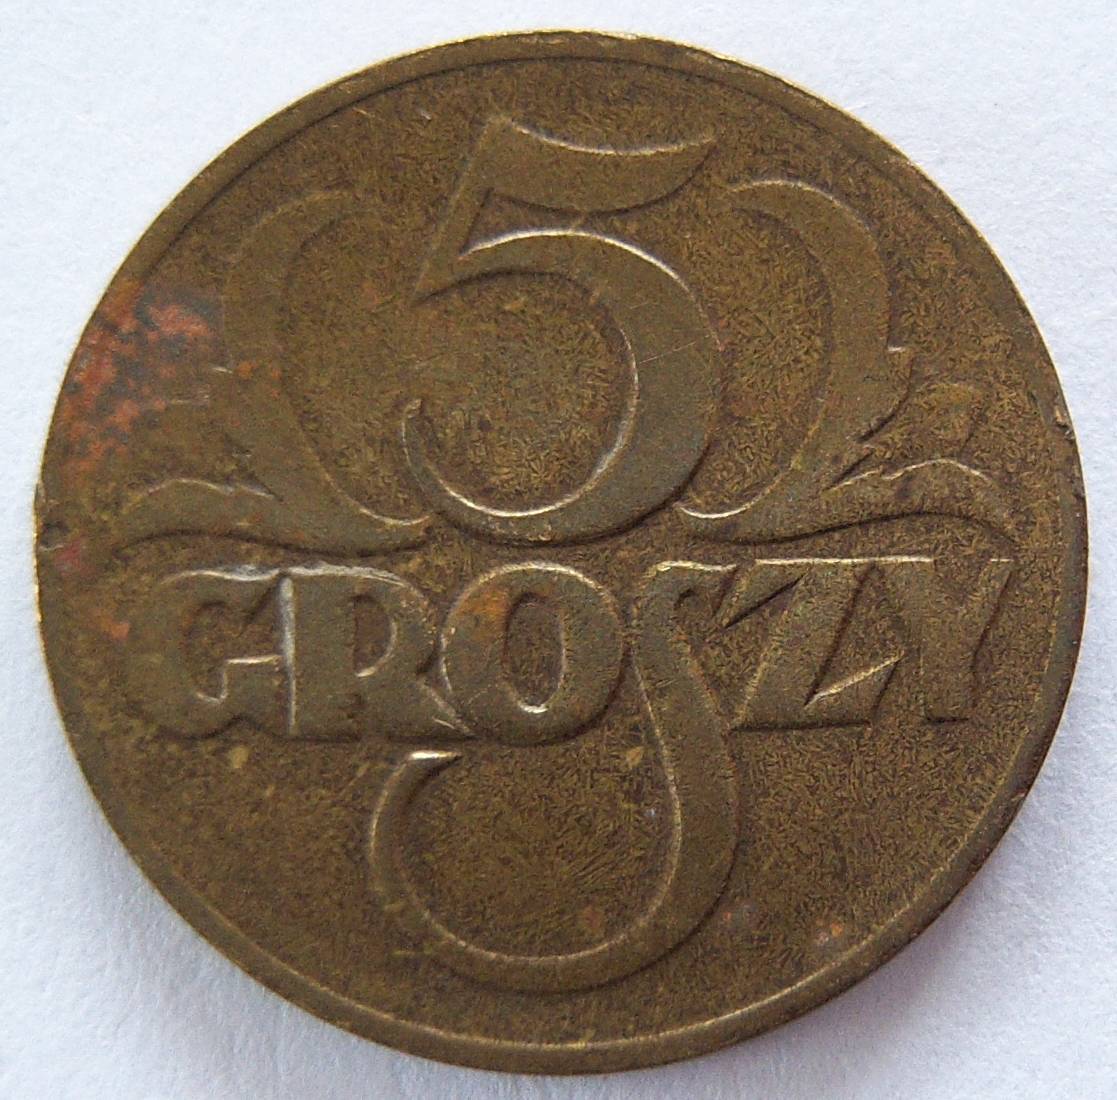  Polen 5 Groszy 1923   